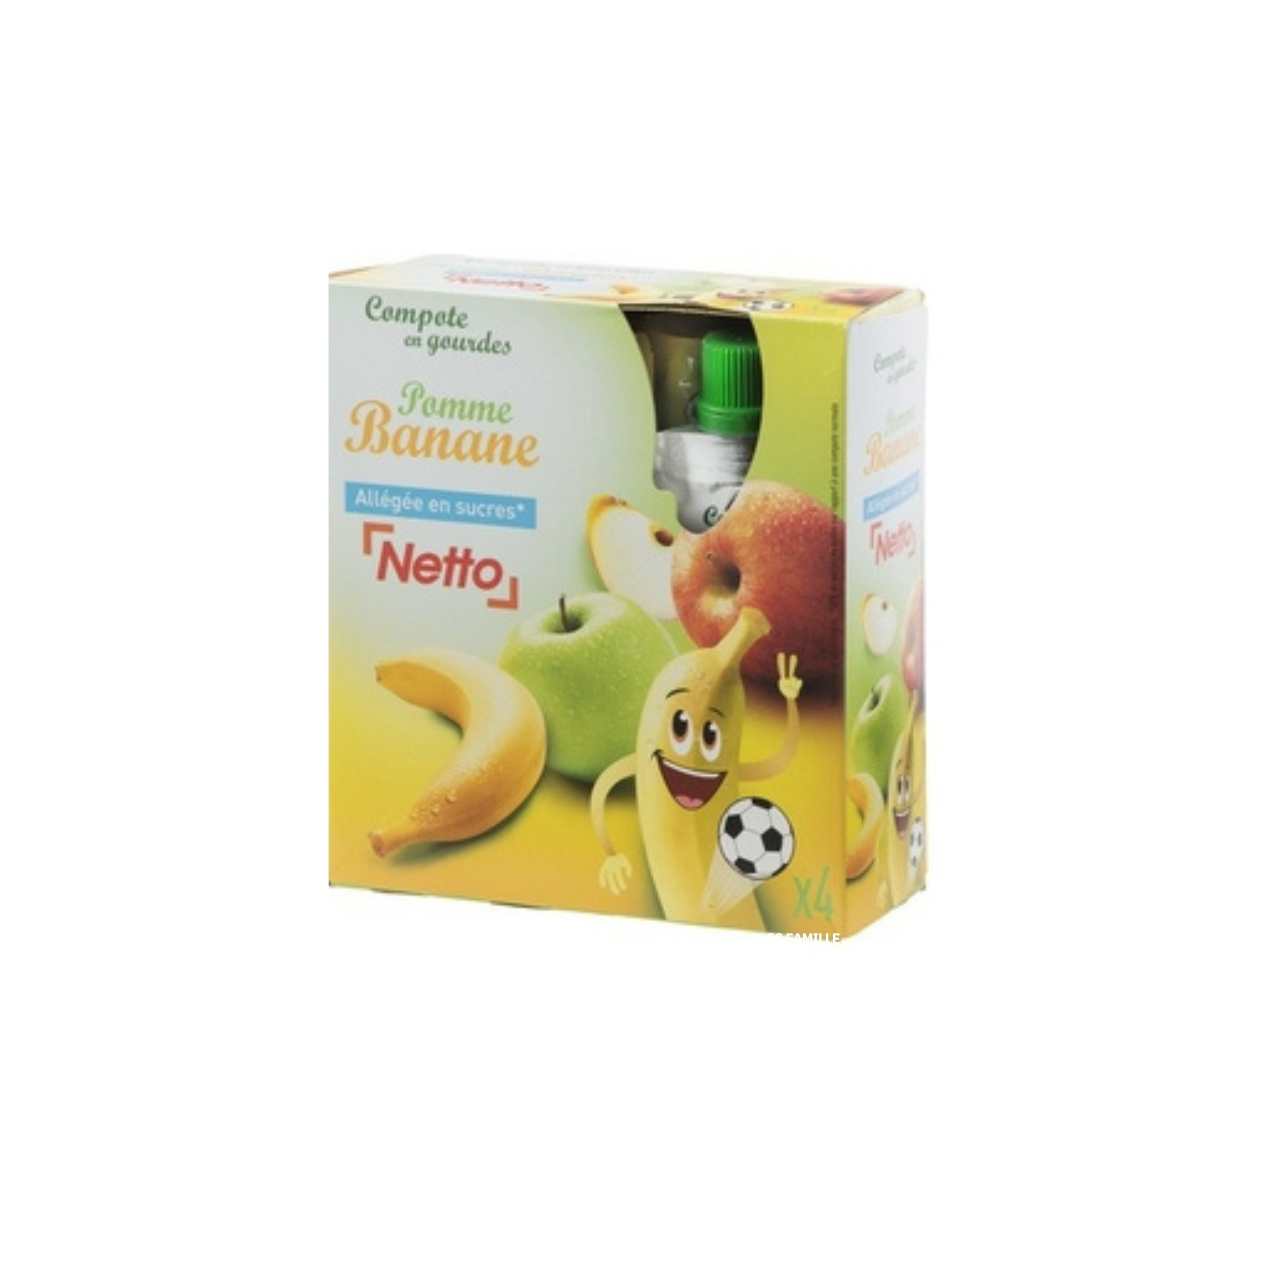 NETTO Gourde pommes bananes 4x90g